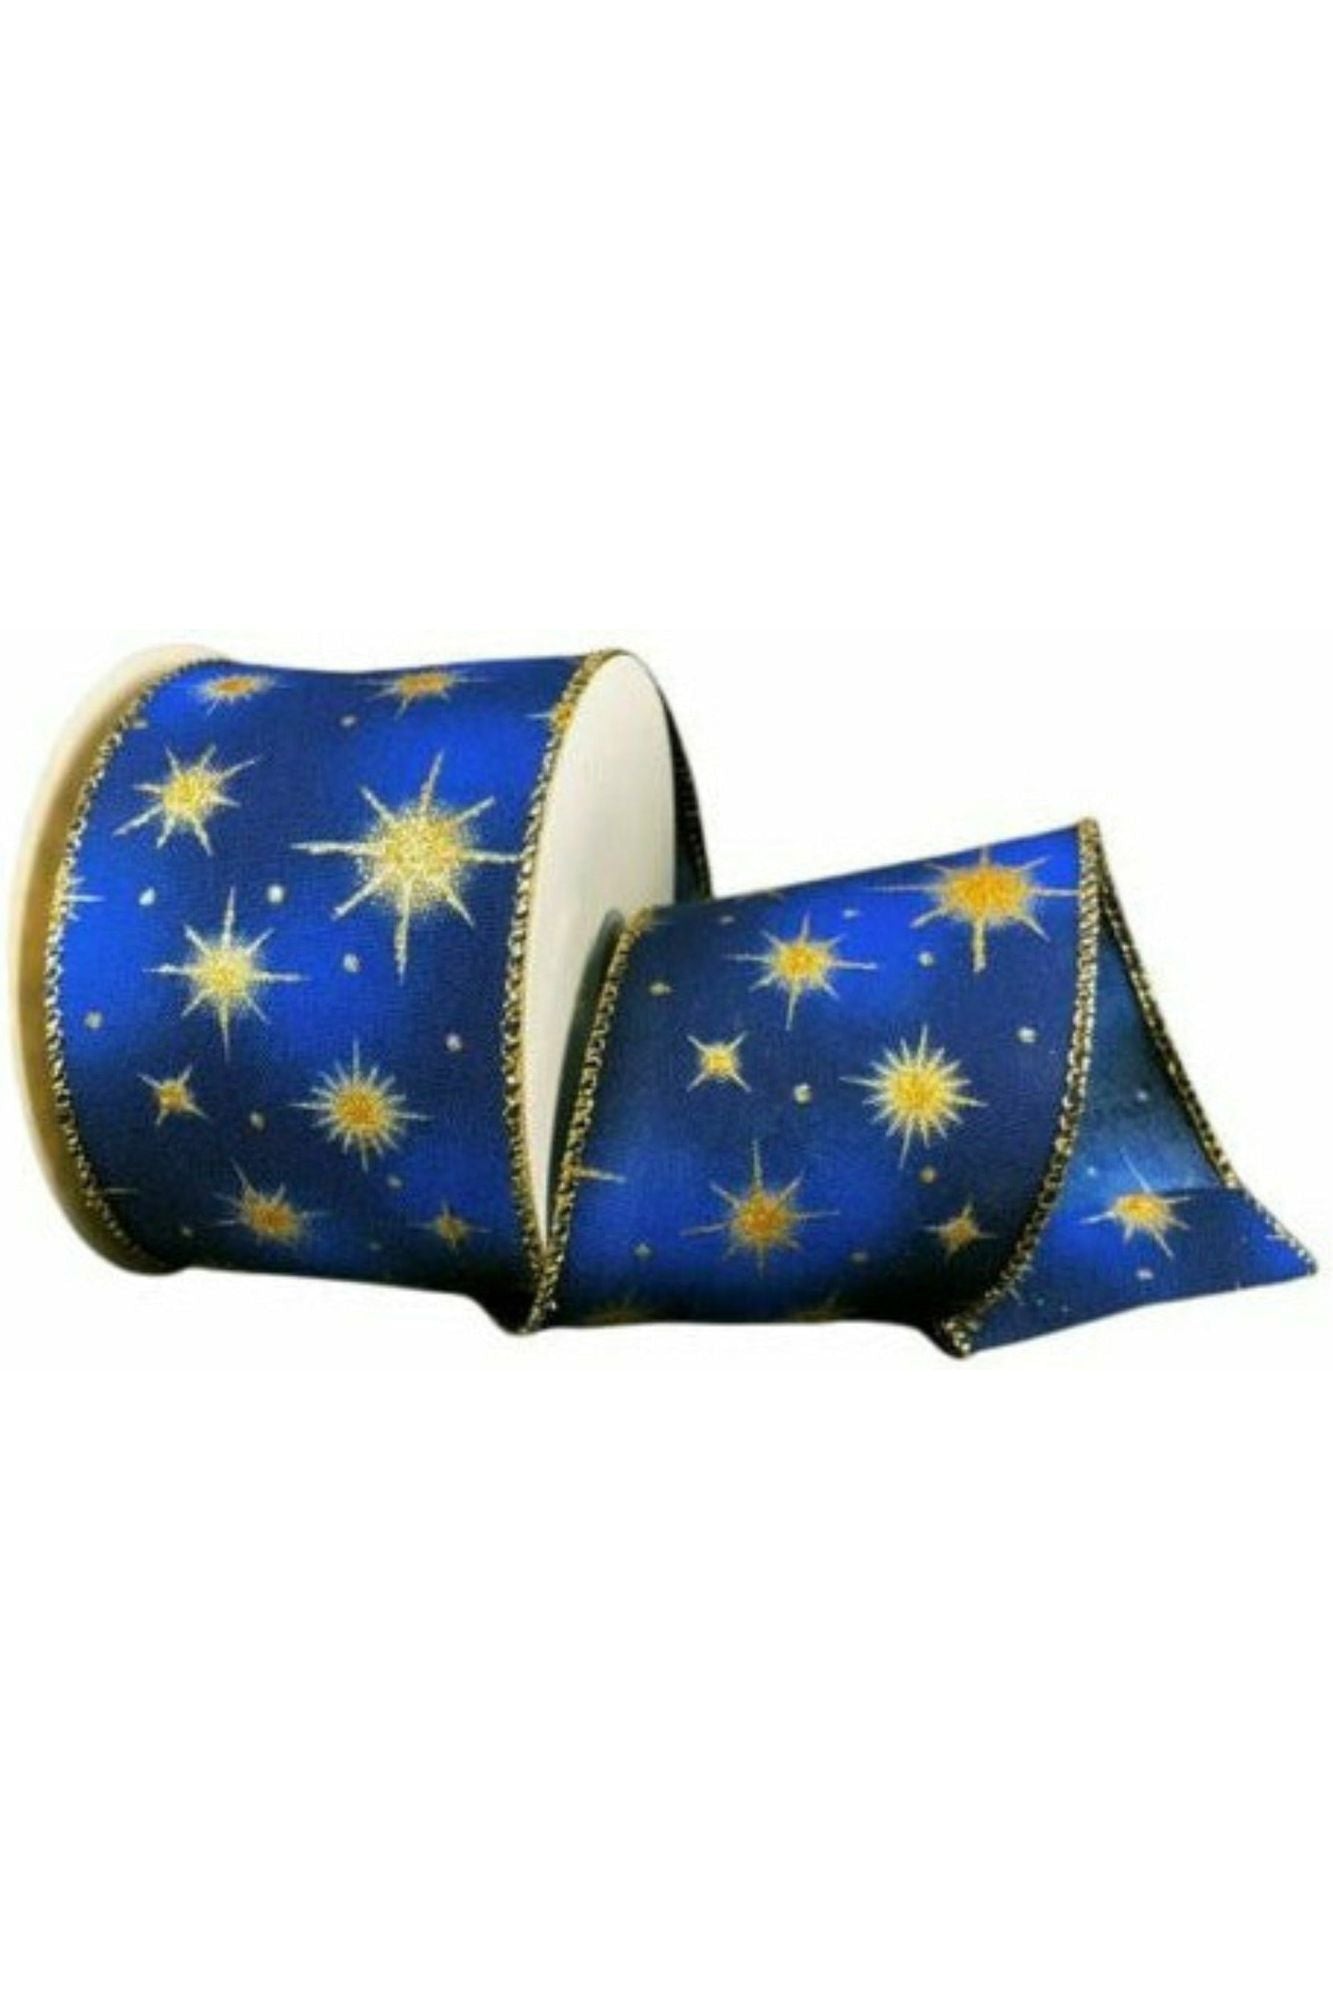 Shop For 2.5" Gold Stars Navy Skies Ribbon: Navy Blue (10 Yards) 72121-40-25